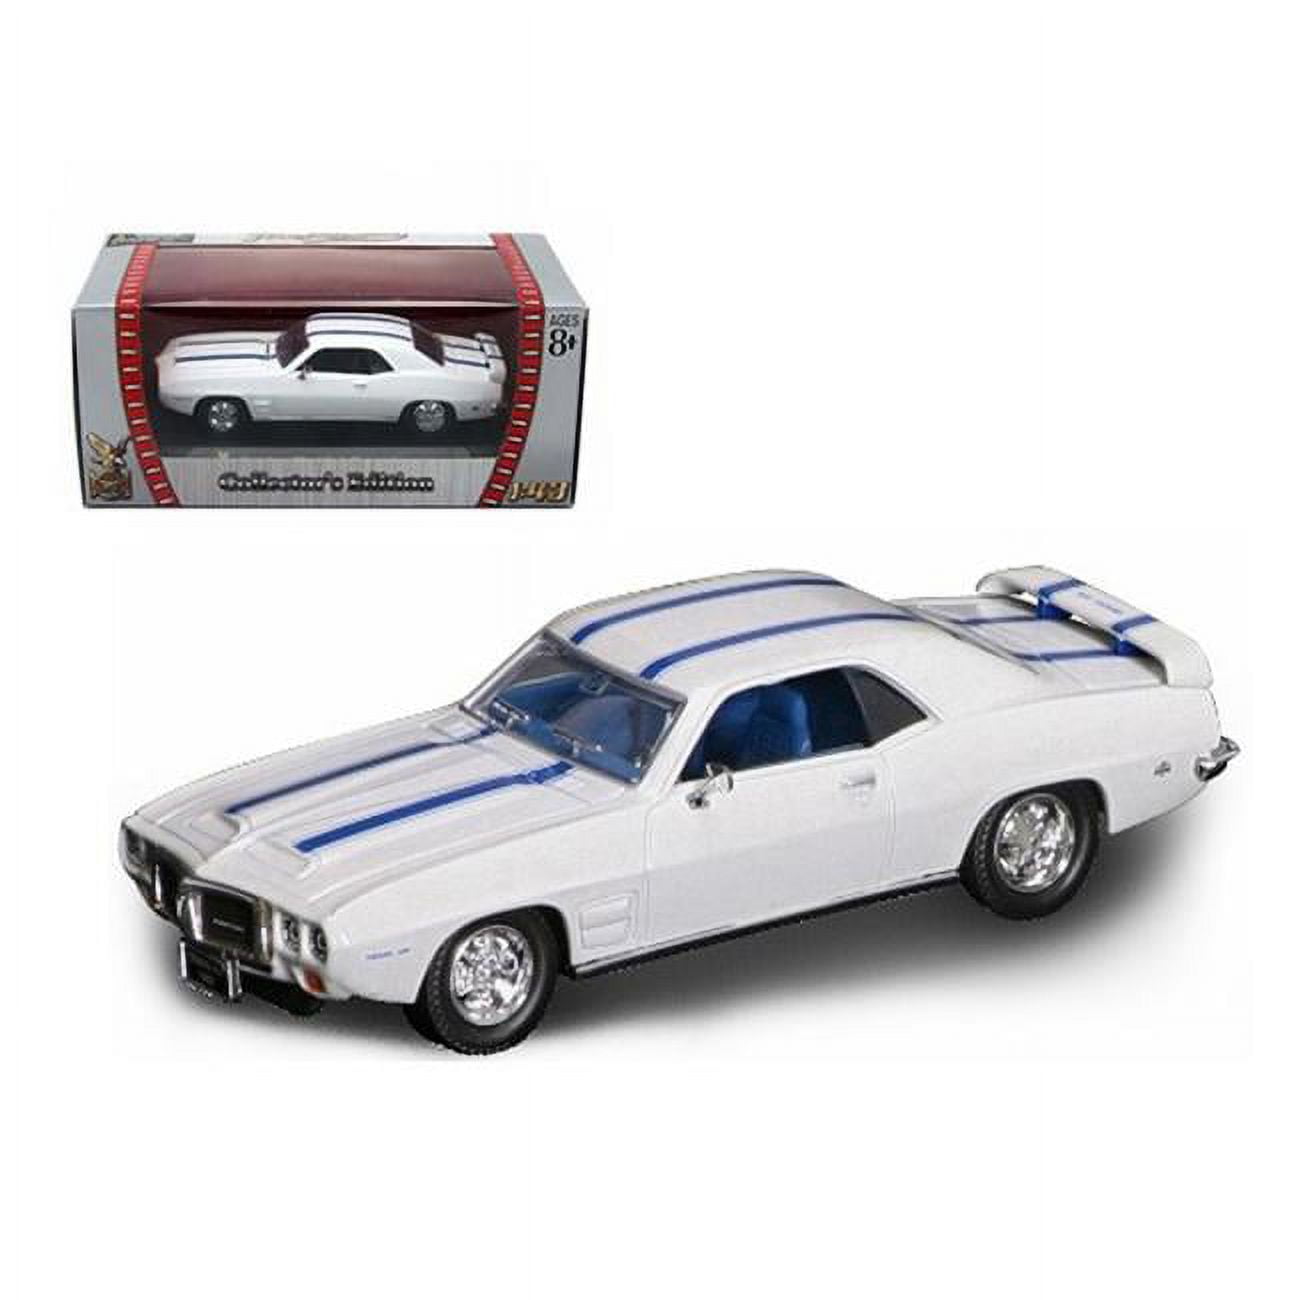 94238w 1 By 43 1969 Pontiac Firebird Trans Am Diecast Car, White